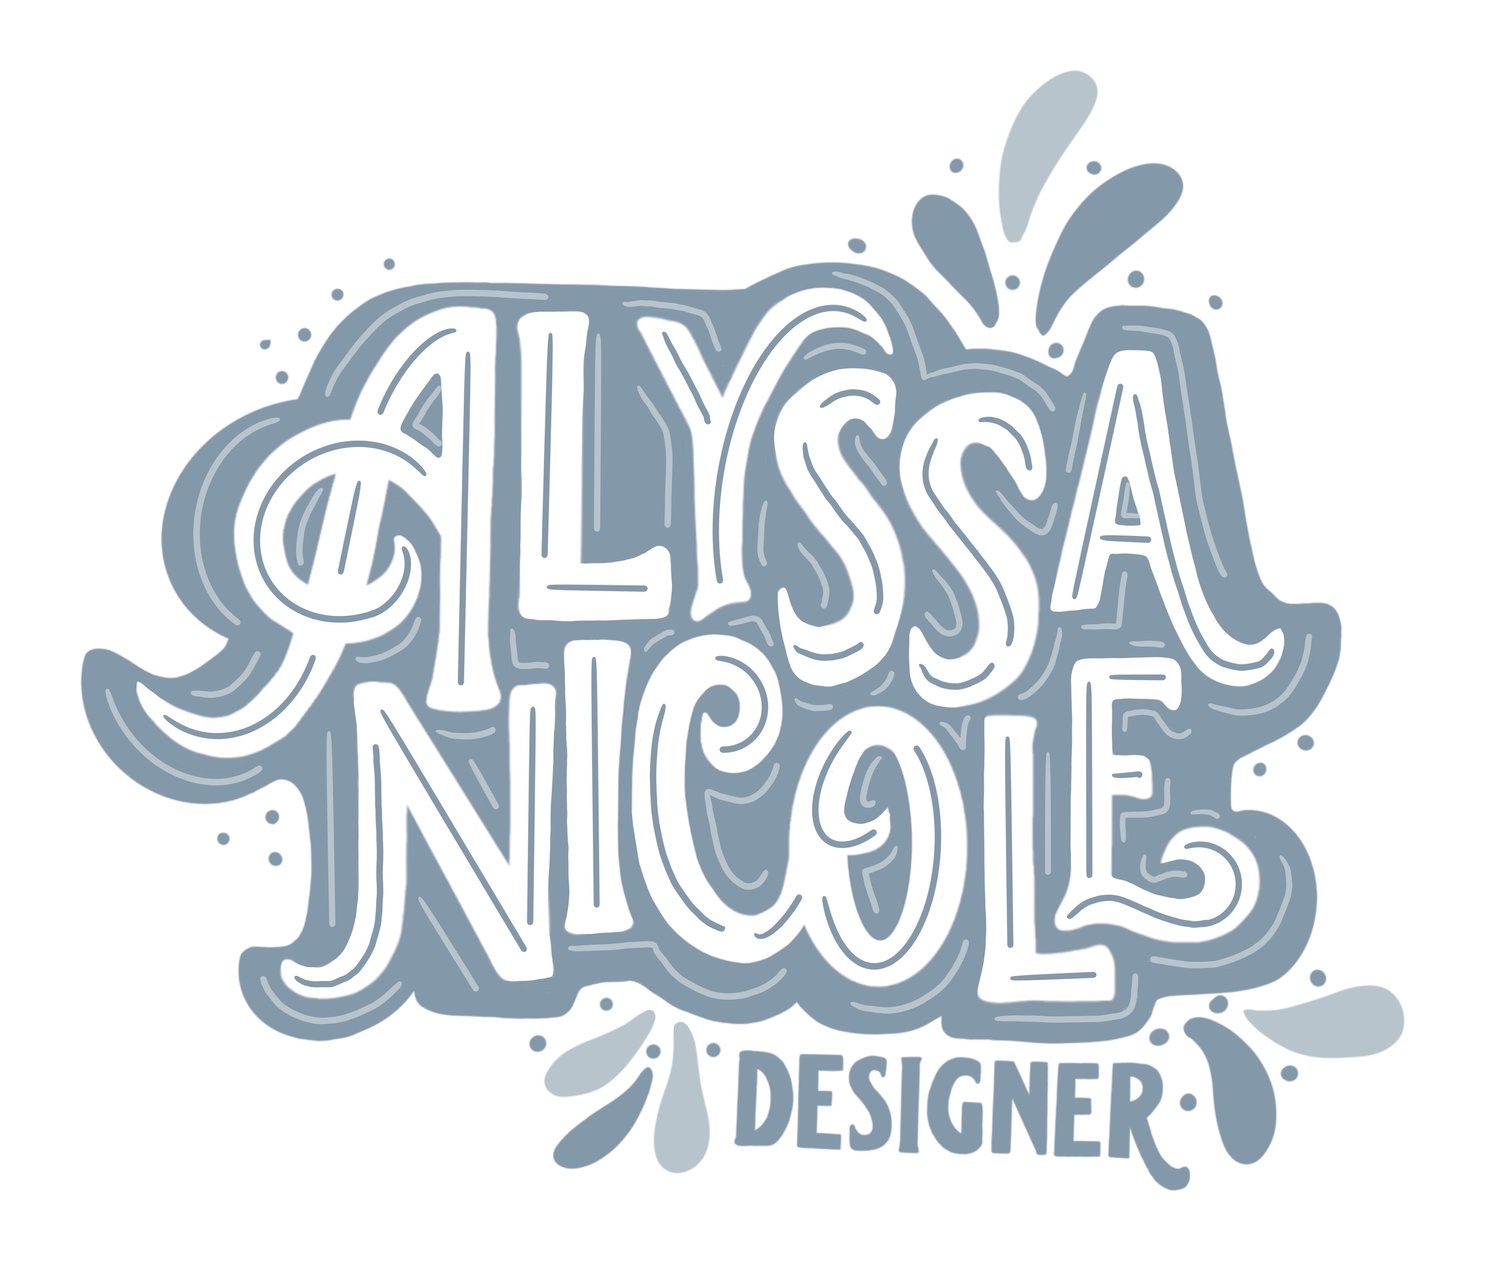 Alyssa Nicole